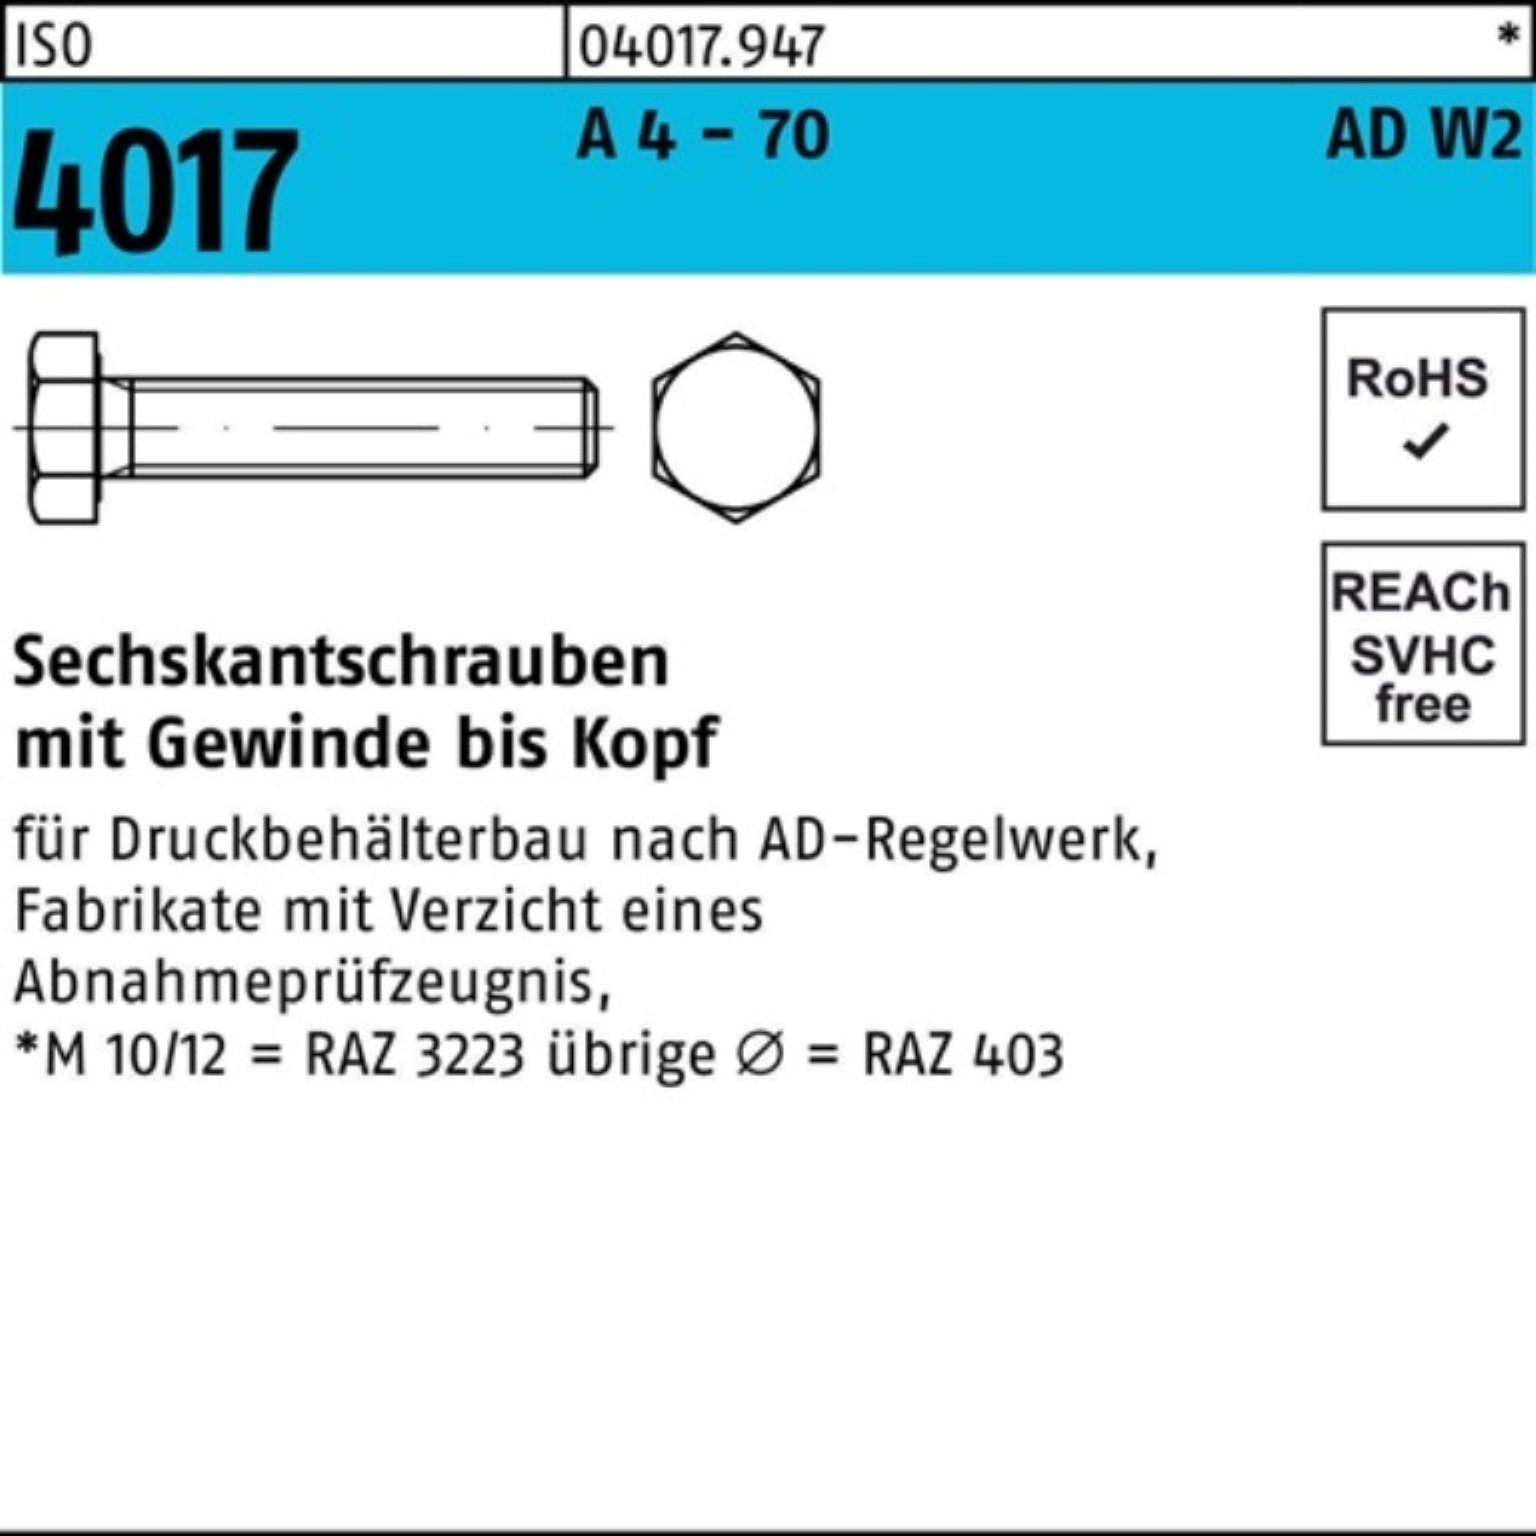 Bufab Sechskantschraube 100er Pack Sechskantschraube ISO 4017 VG M16x 35 A 4 - 70 AD-W2 25 St